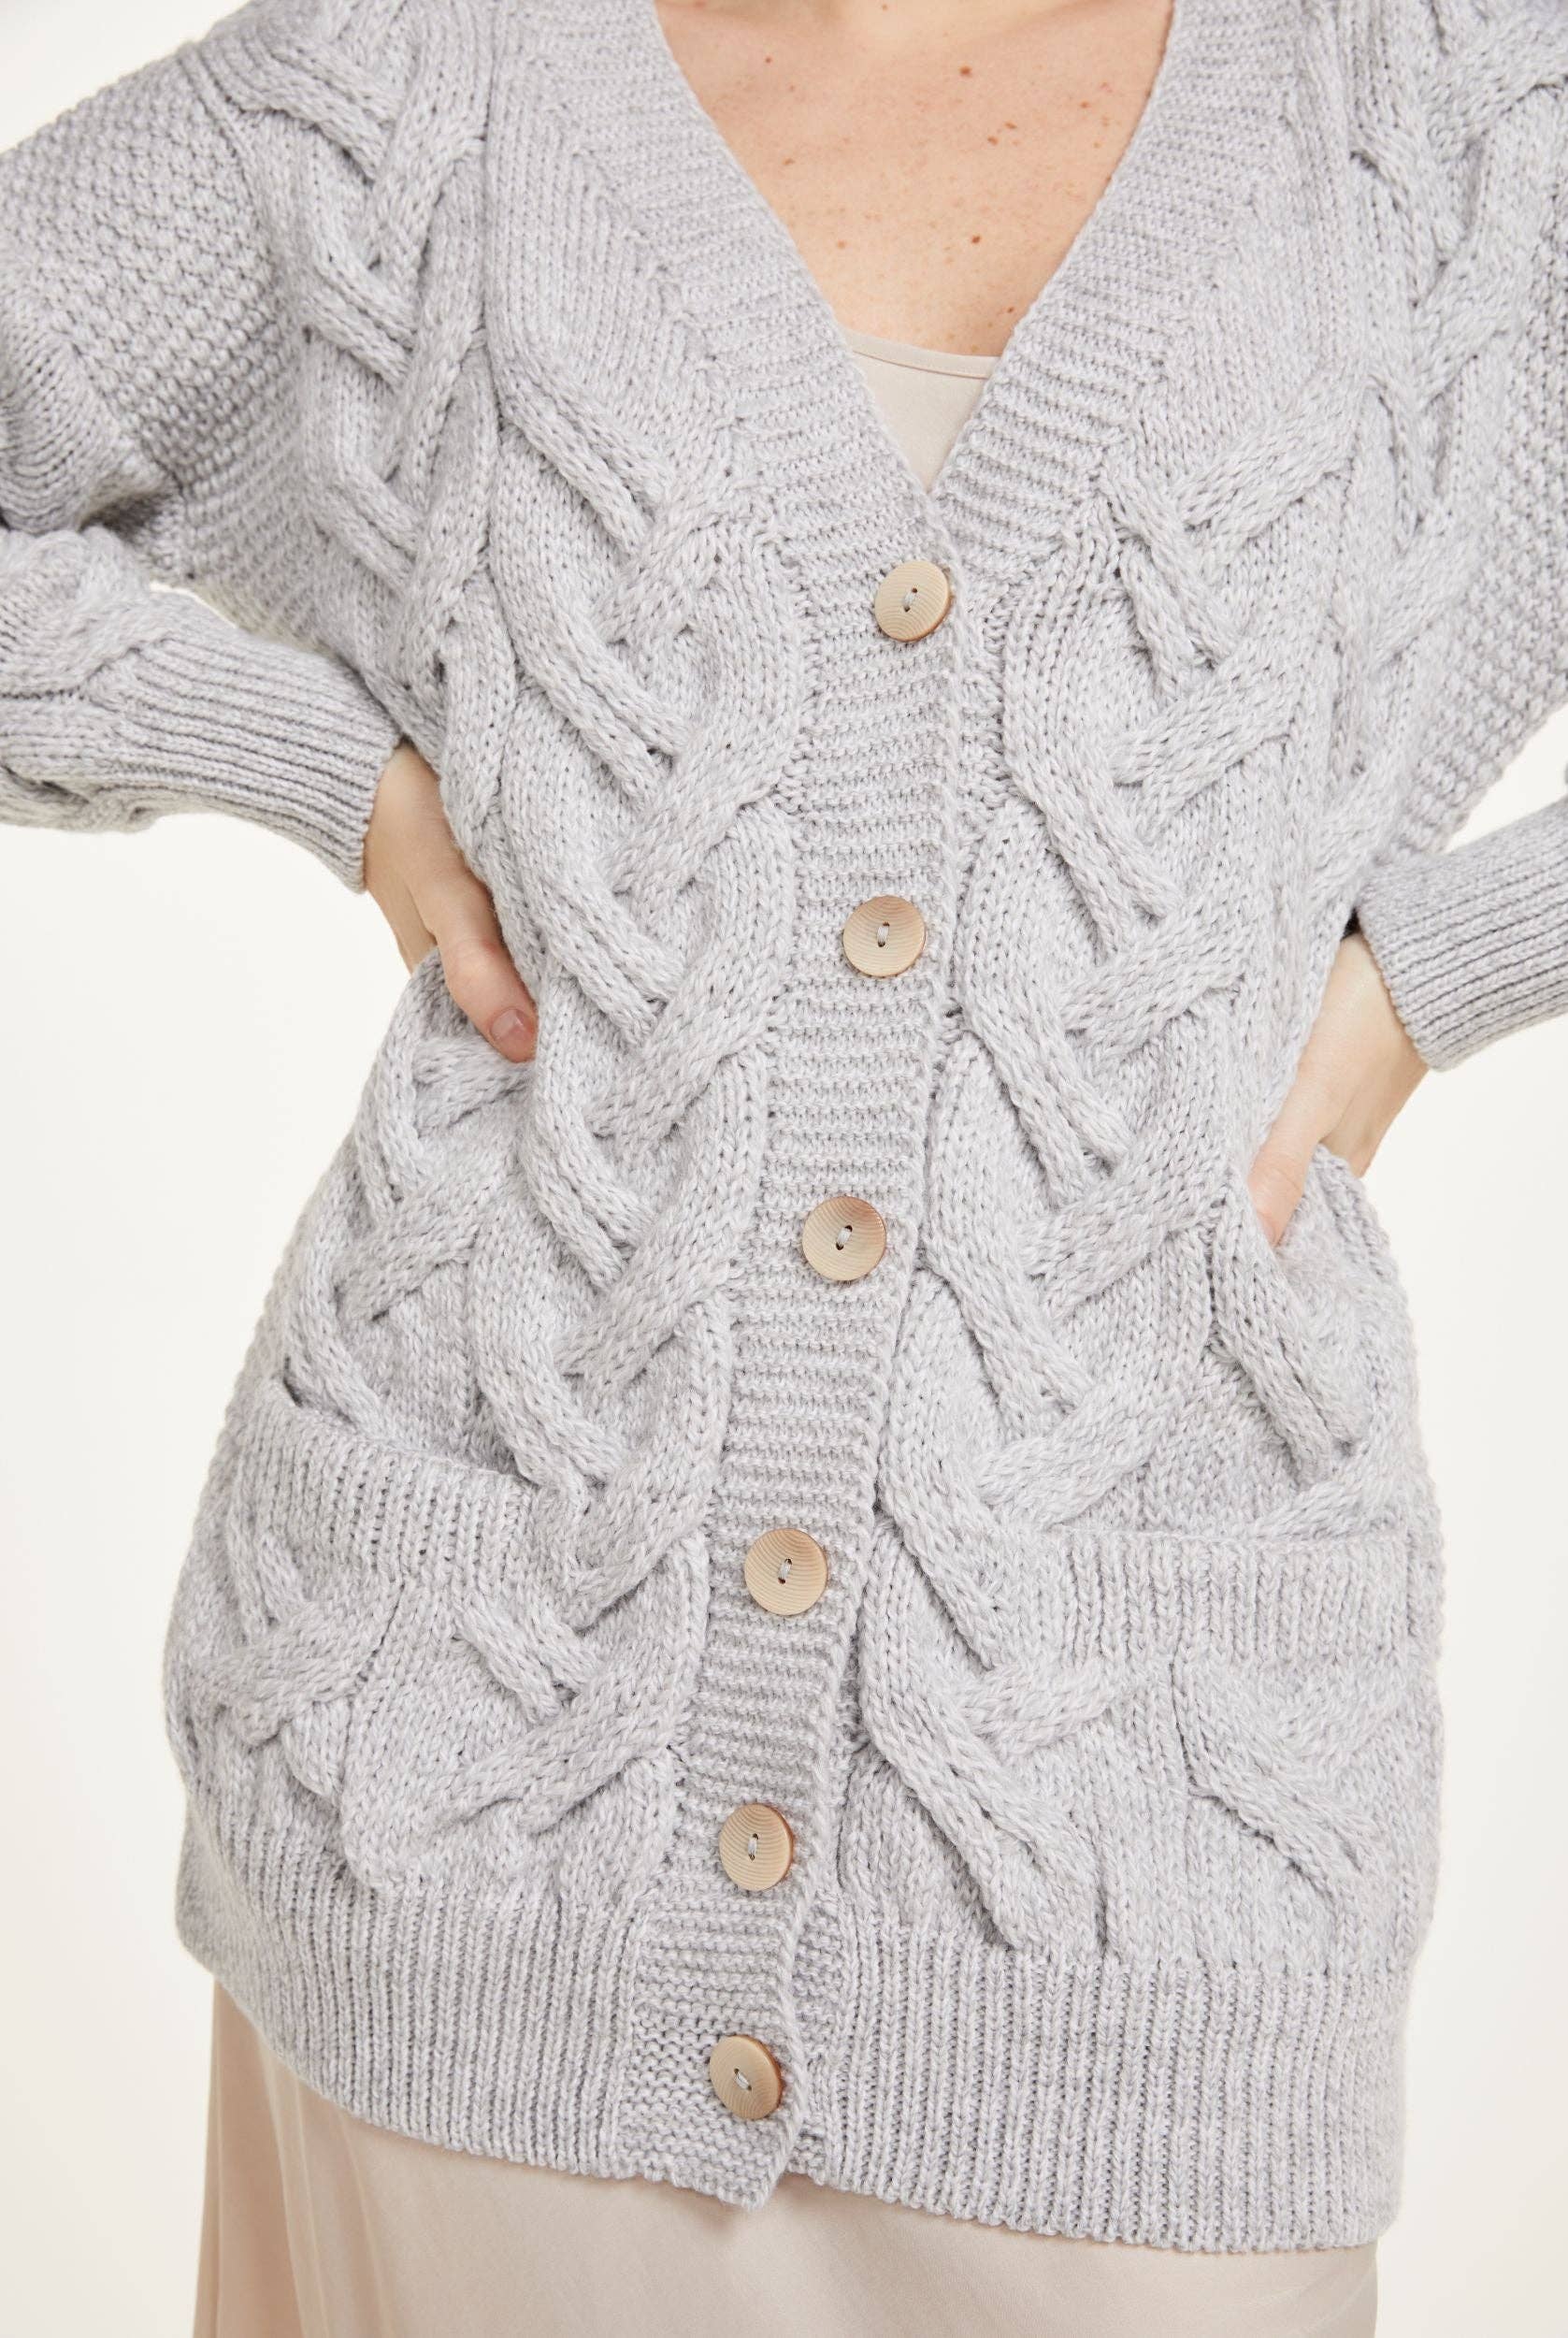 Sweater: Downpatrick Ladies Aran Cardigan - Feathered Grey